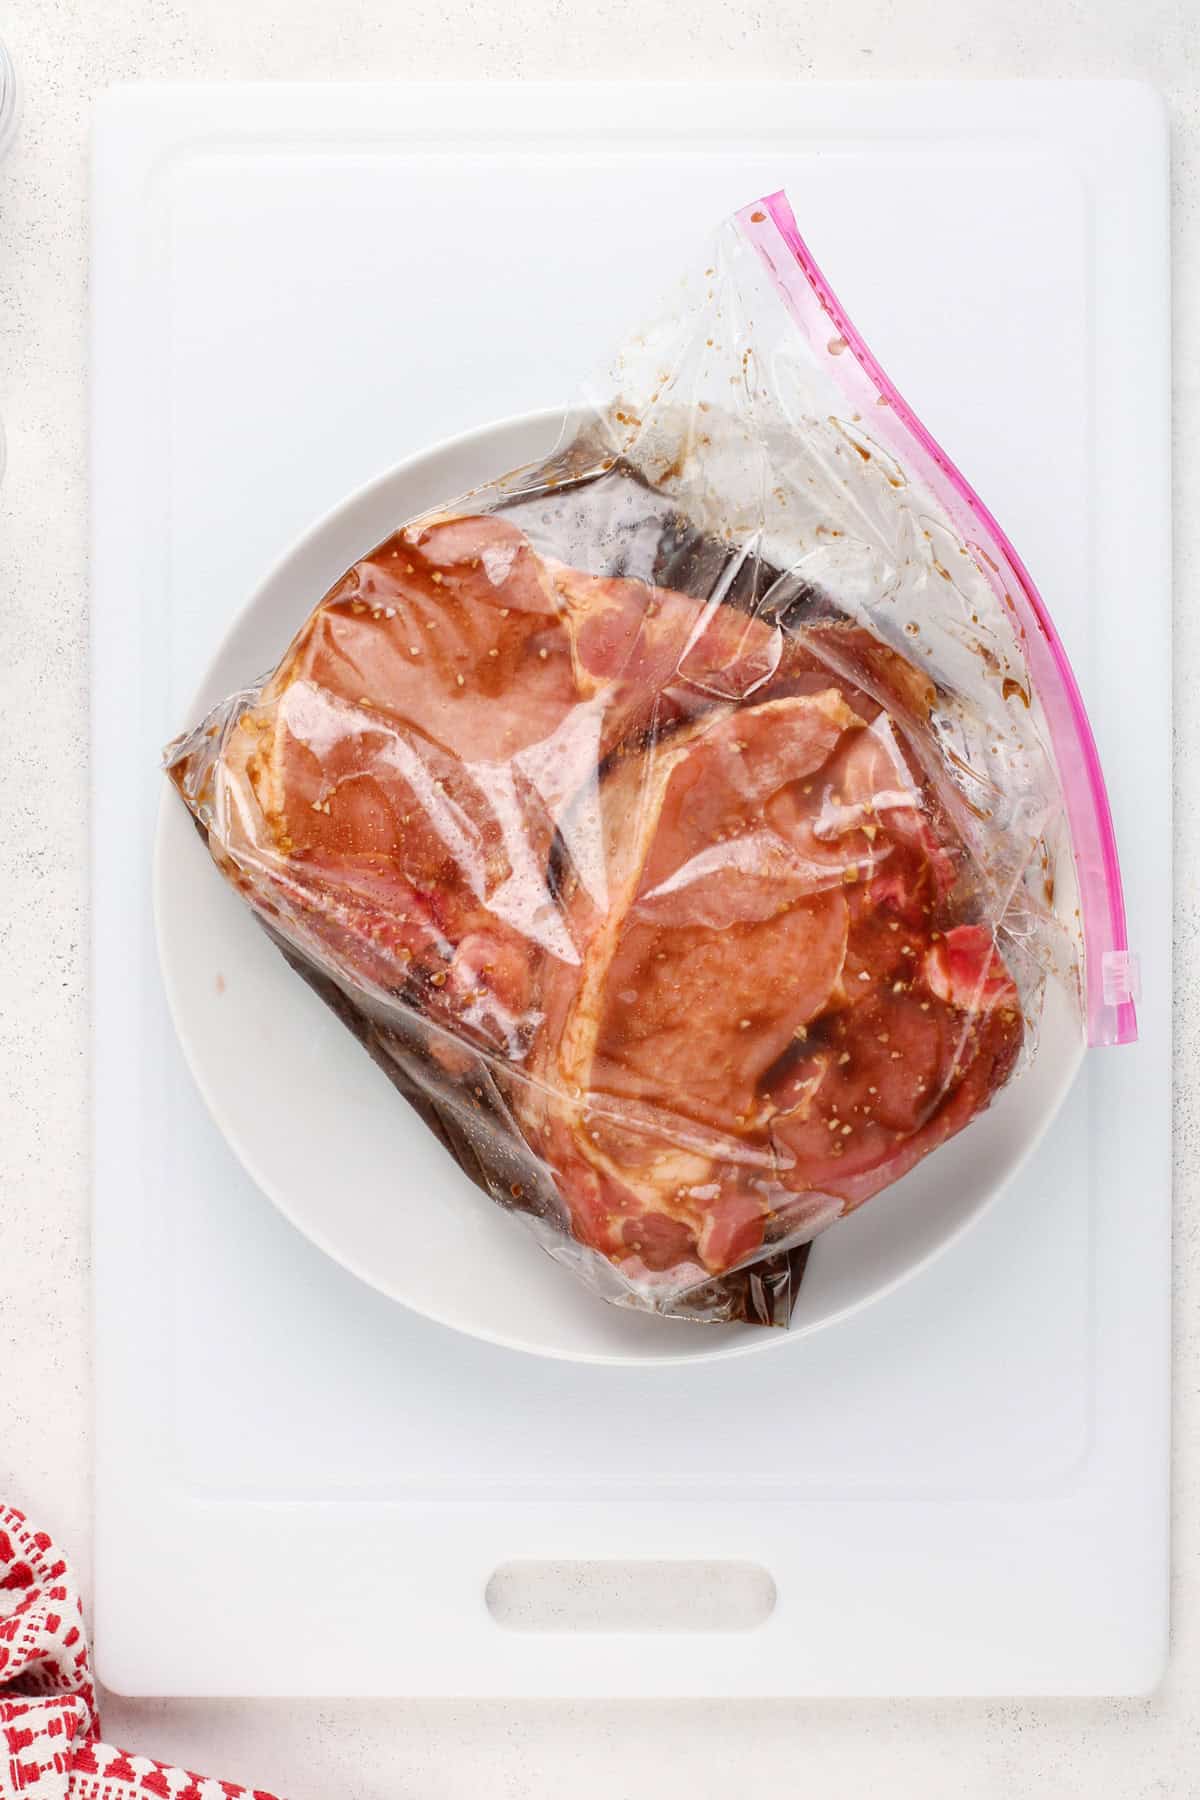 Pork chops and marinade in a zip-top bag.